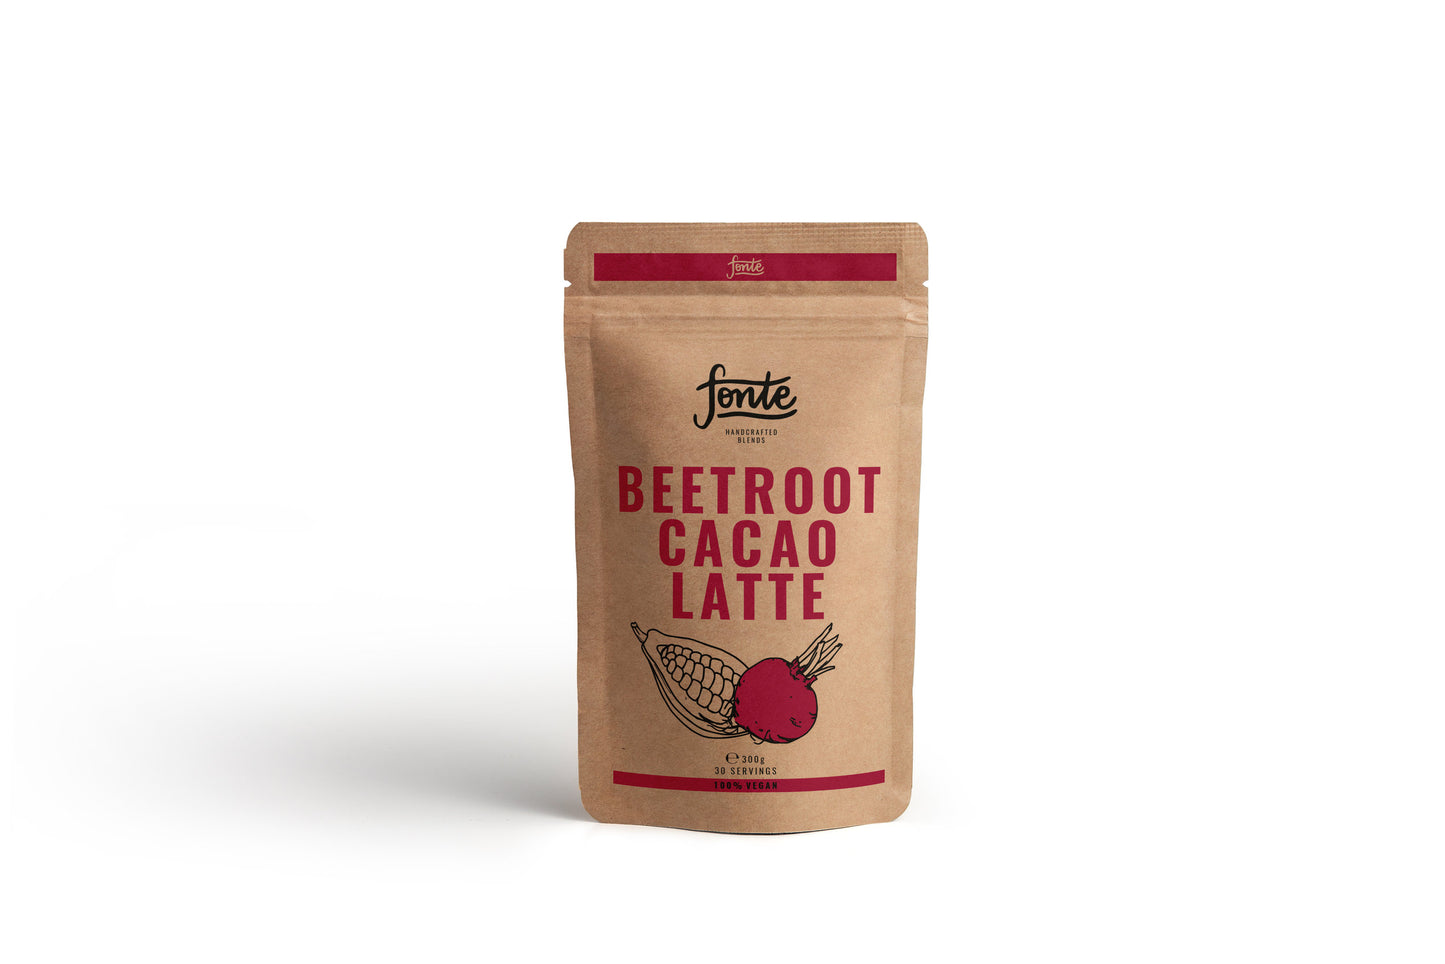 Fonte Beetroot Cacao Latte 300g - 100% Vegan - PREORDER NOW